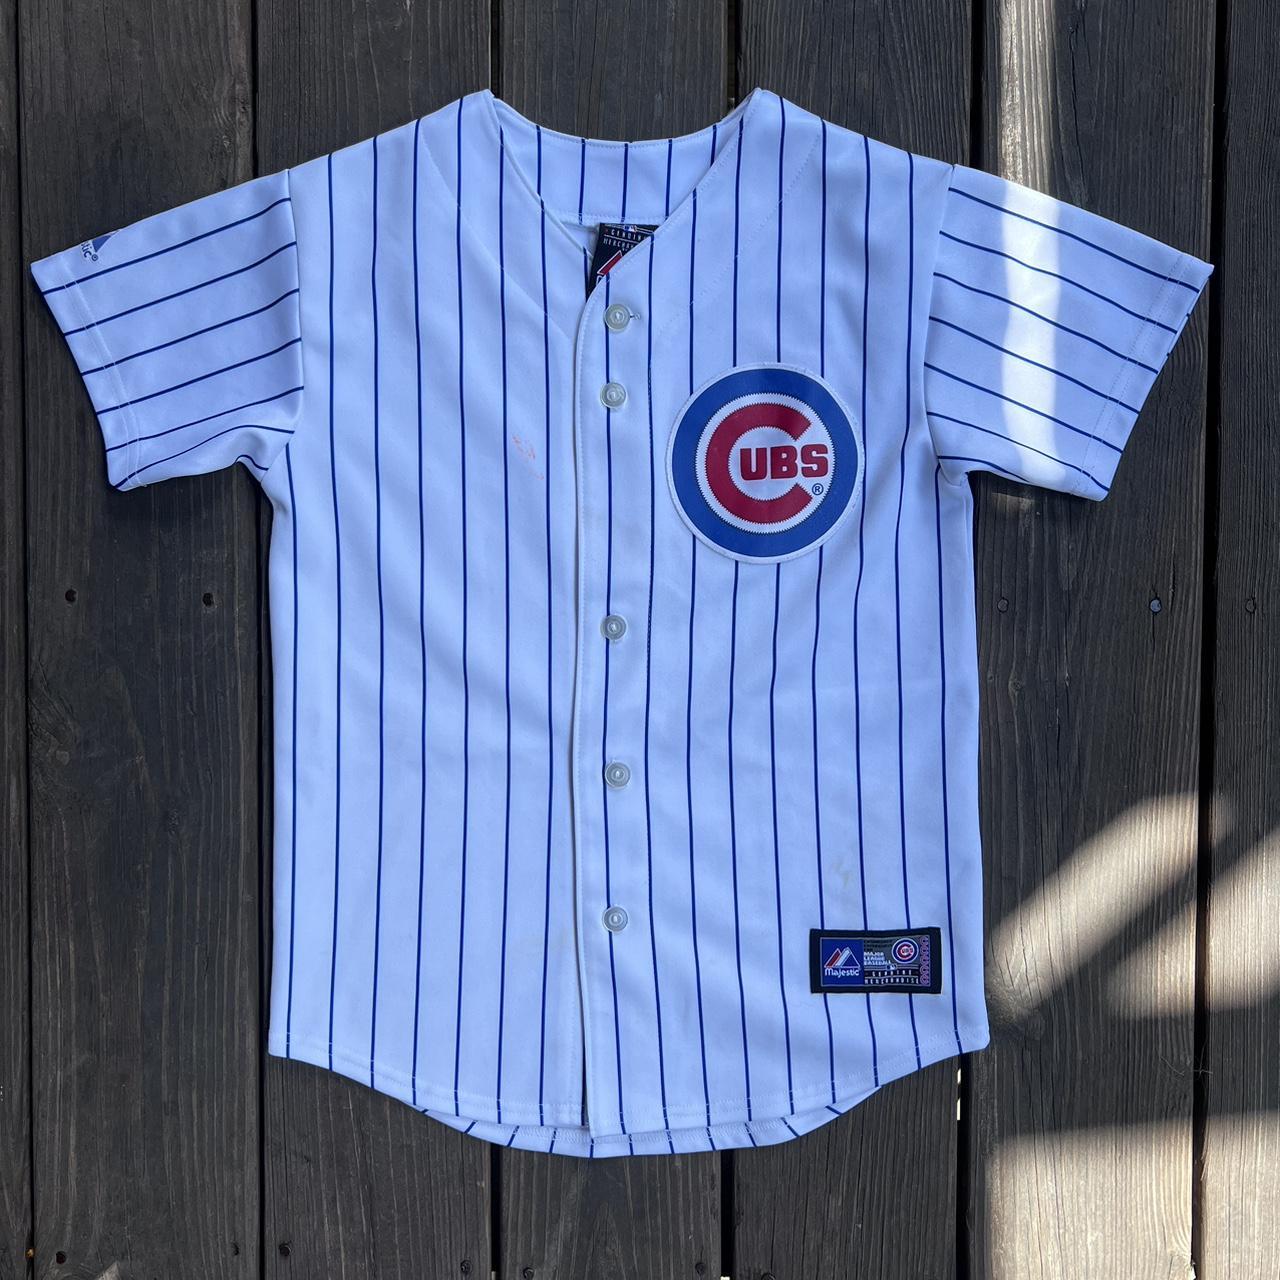 vintage chicago cubs jersey